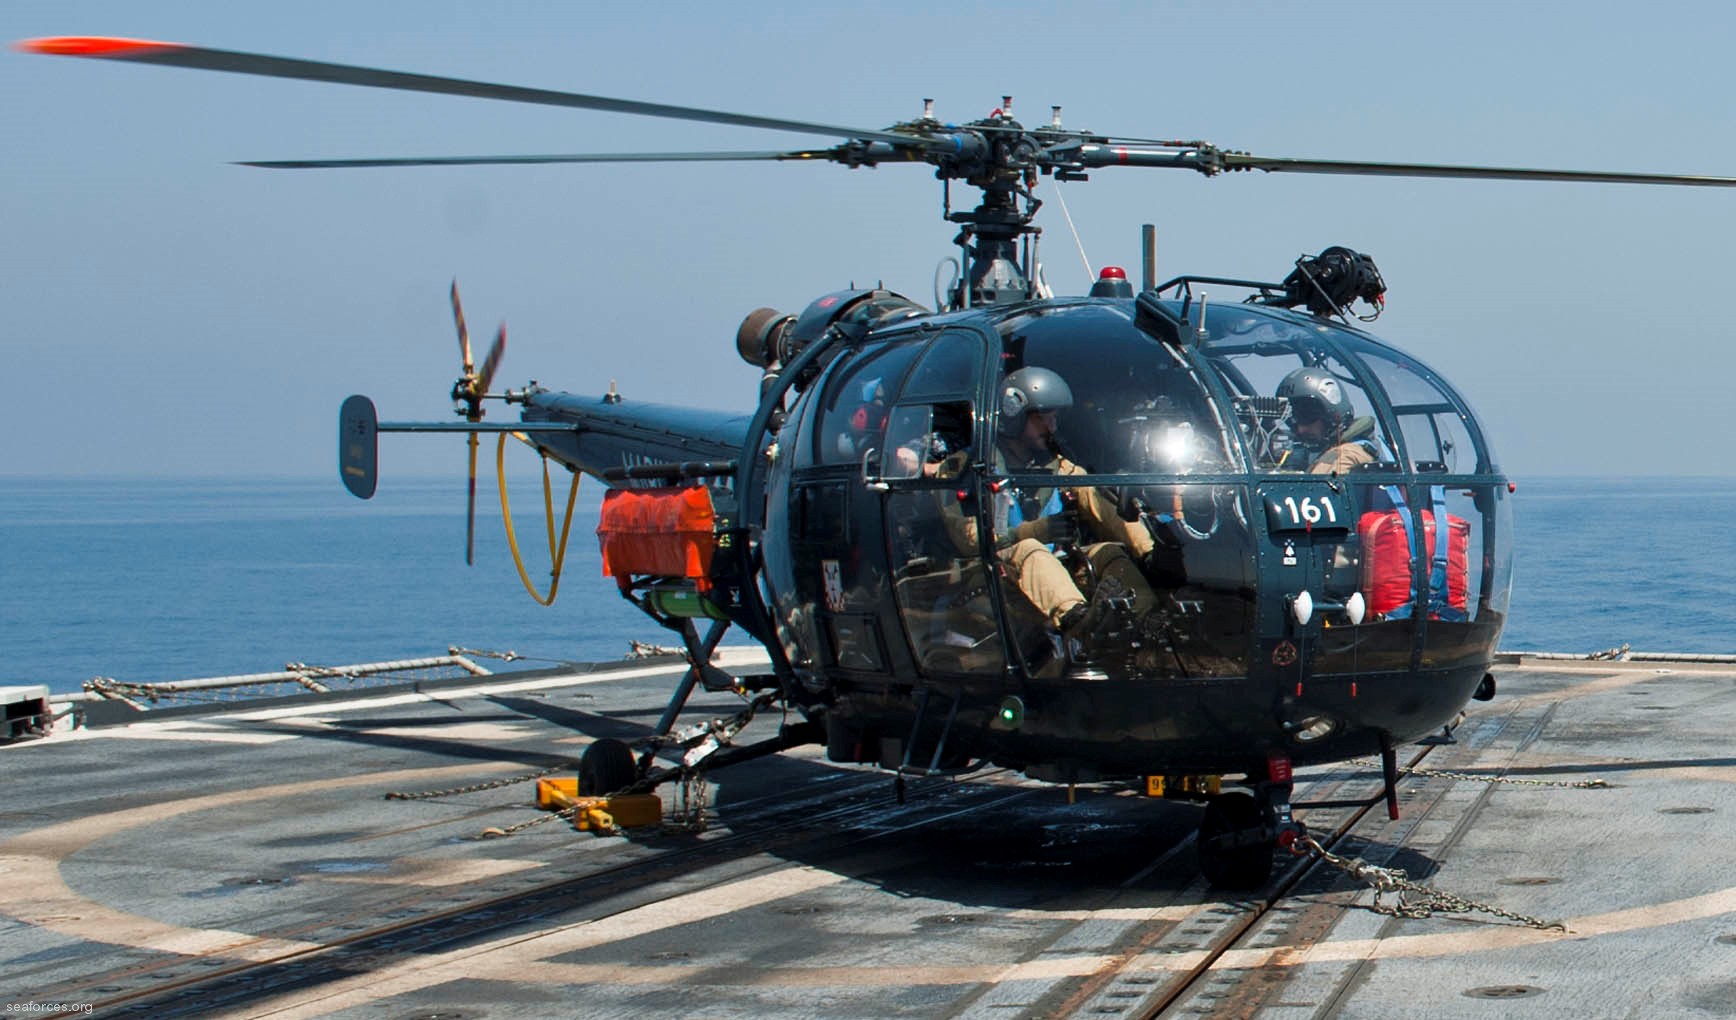 sa 316 319 alouette iii helicopter french navy marine nationale aeronavale flottille 161 08